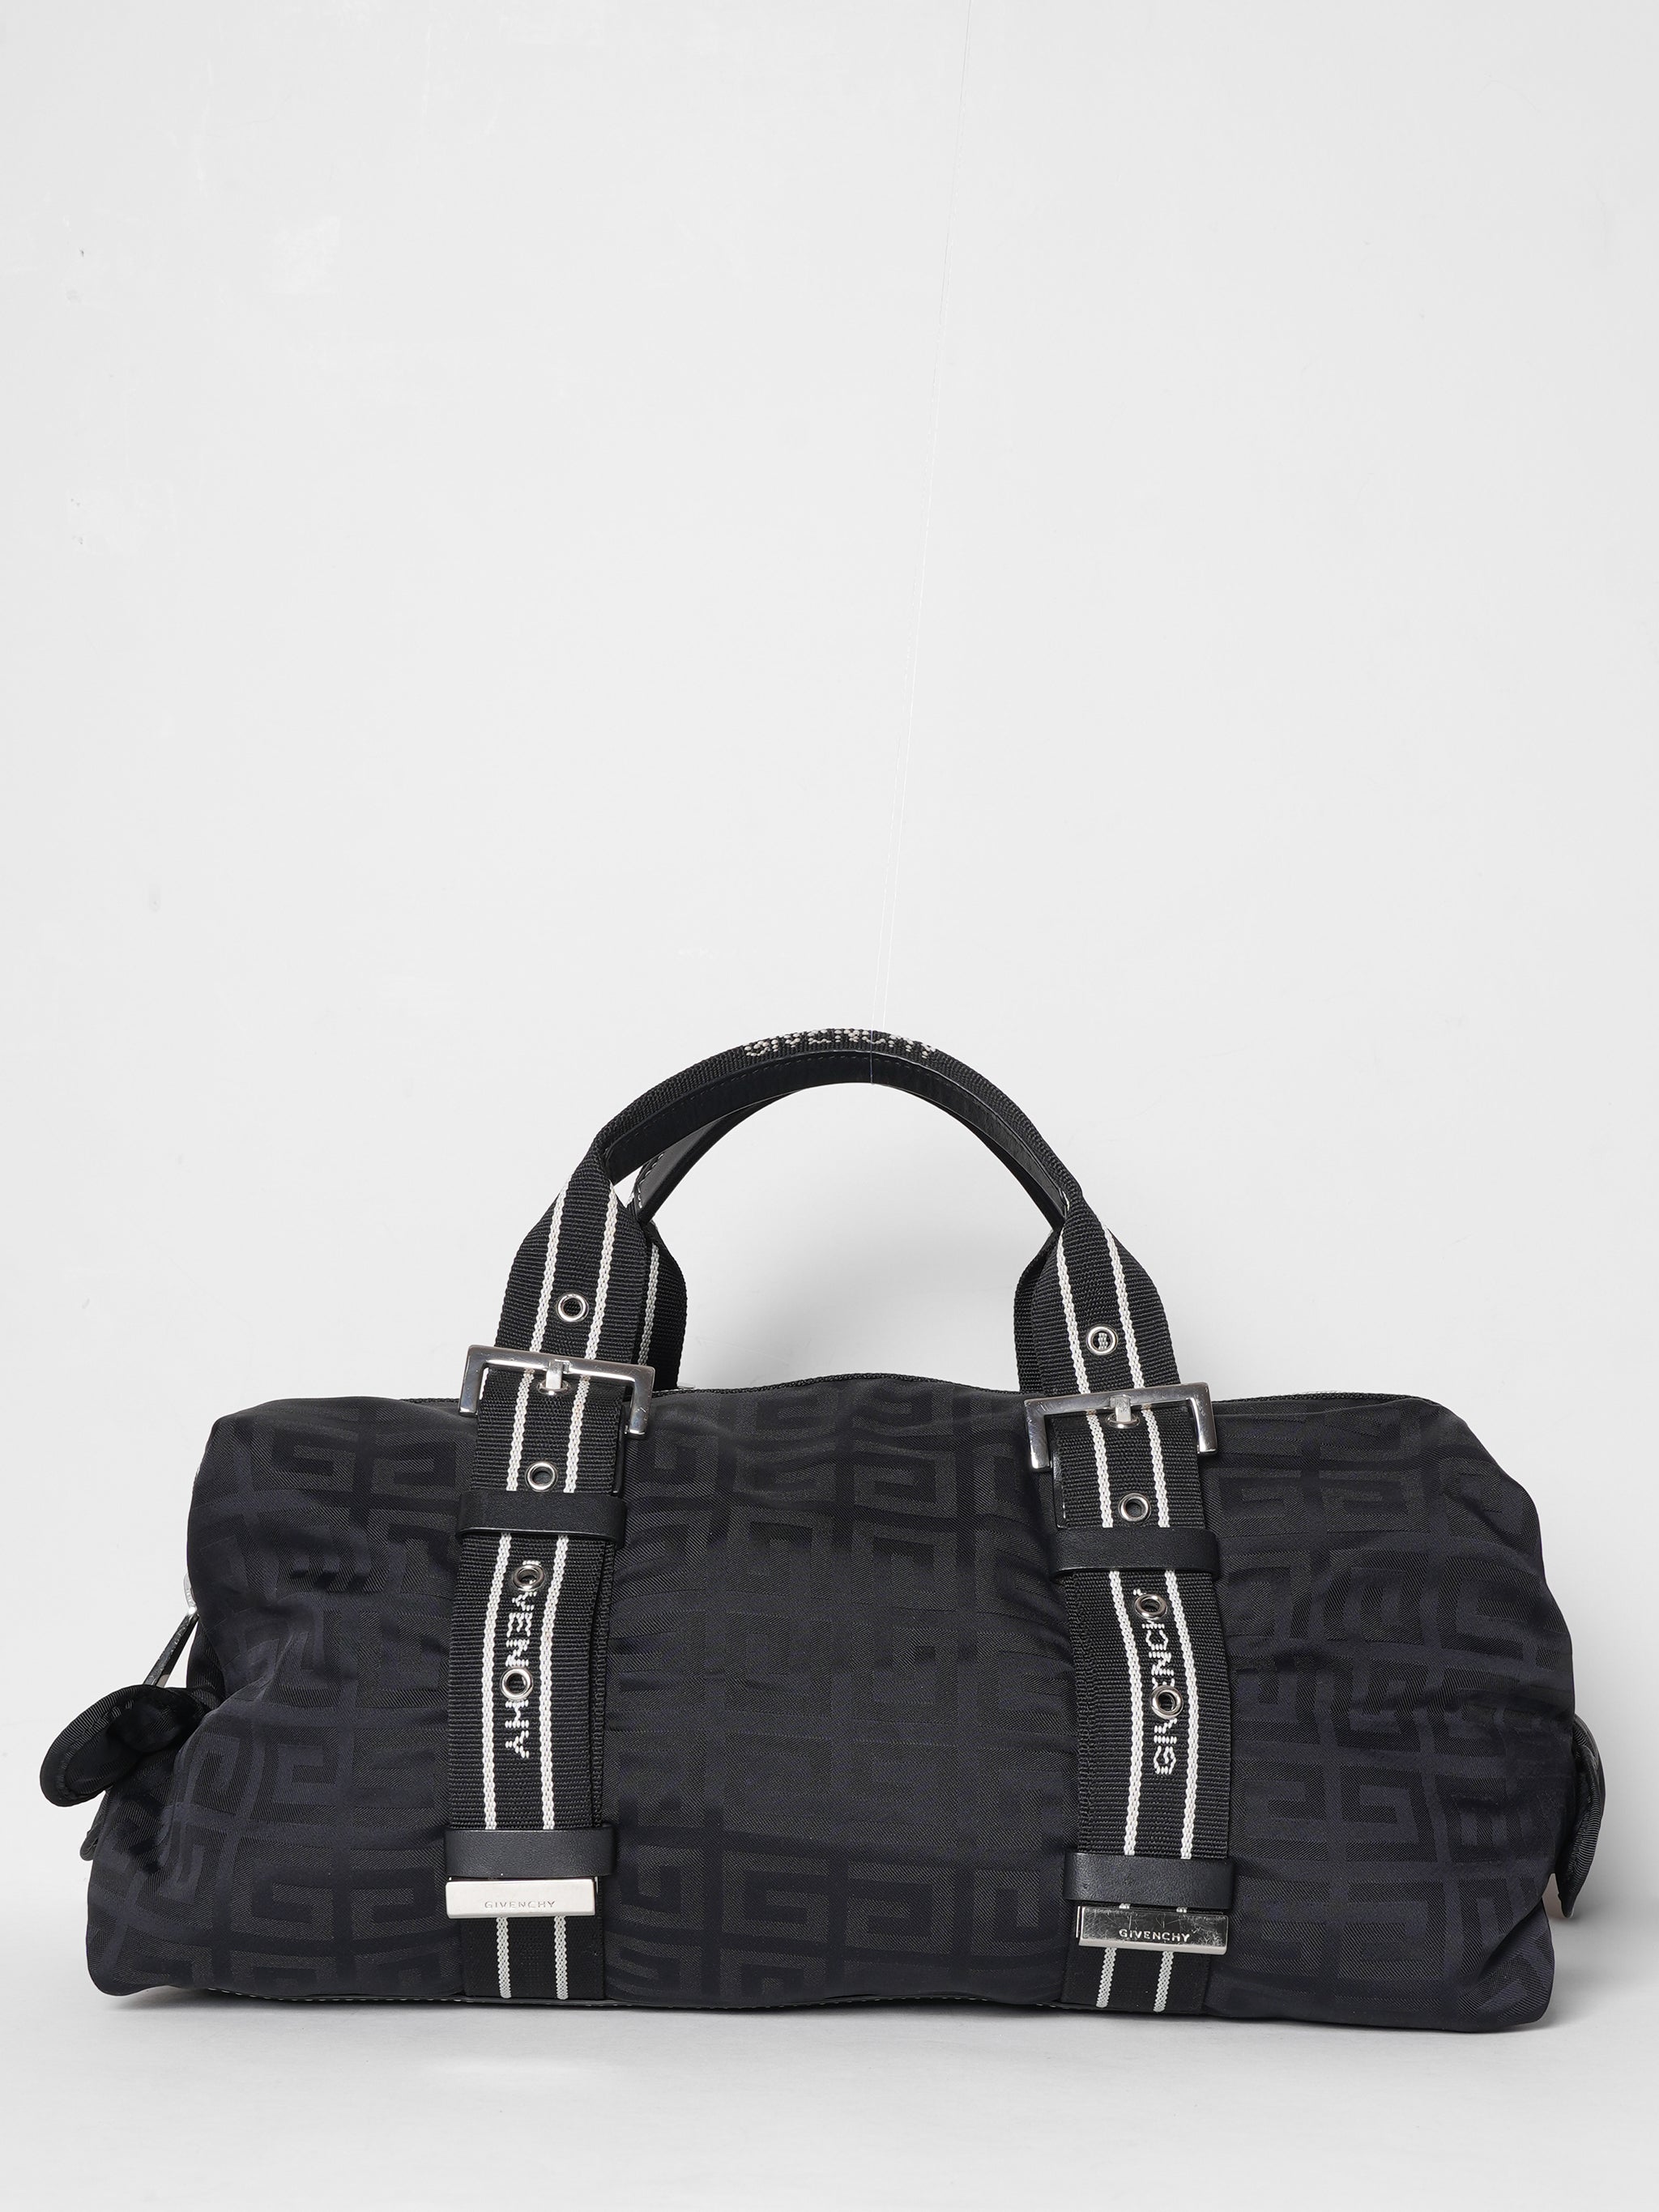 Givenchy Bow Baguette Bag